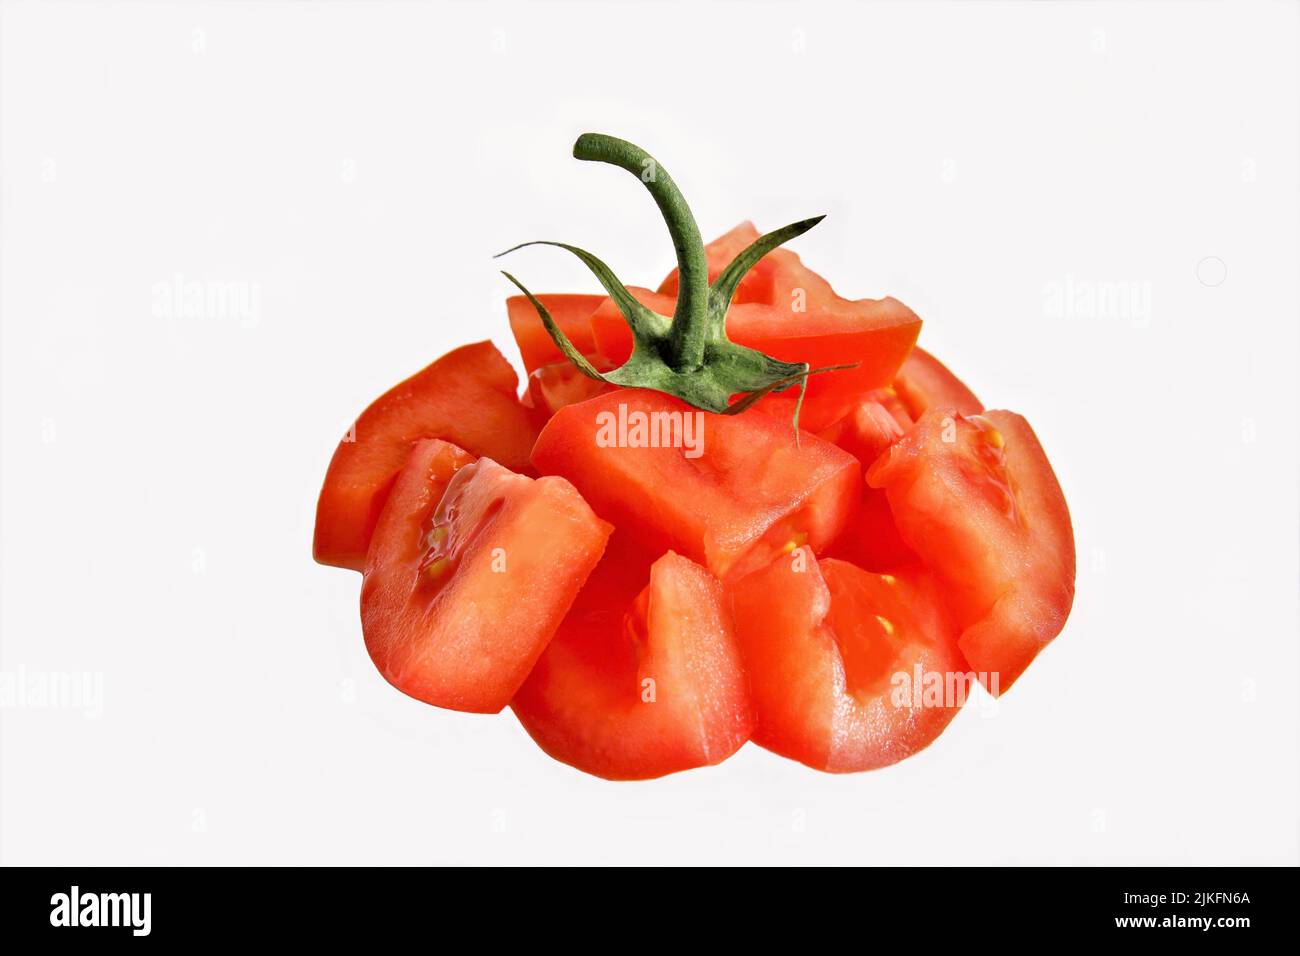 Tomato slices photo on white background  copy space Stock Photo